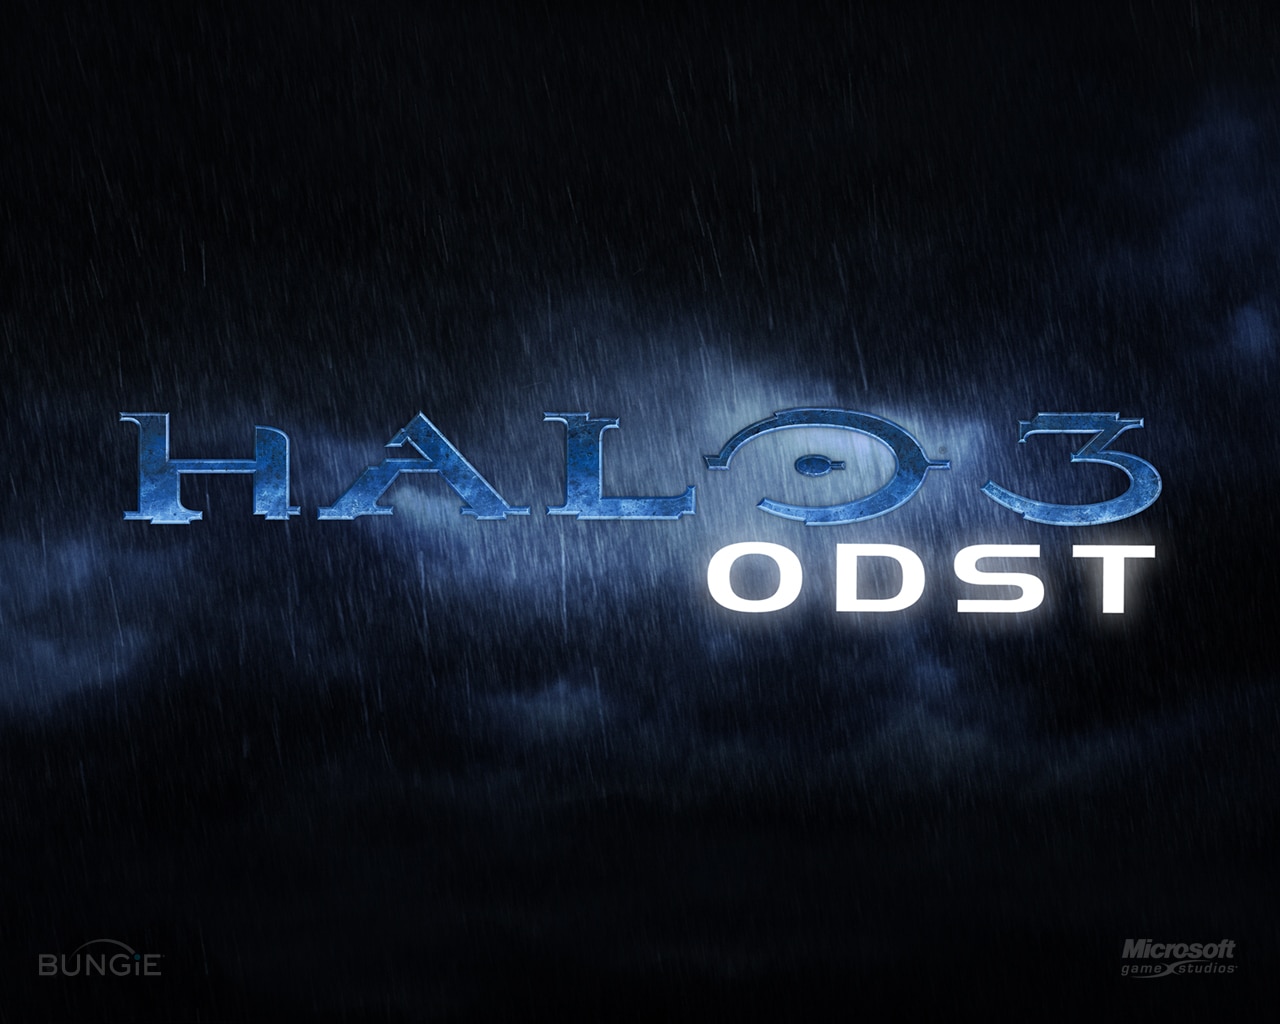 Halo 3 ODST wallpaper - Video Games Blogger